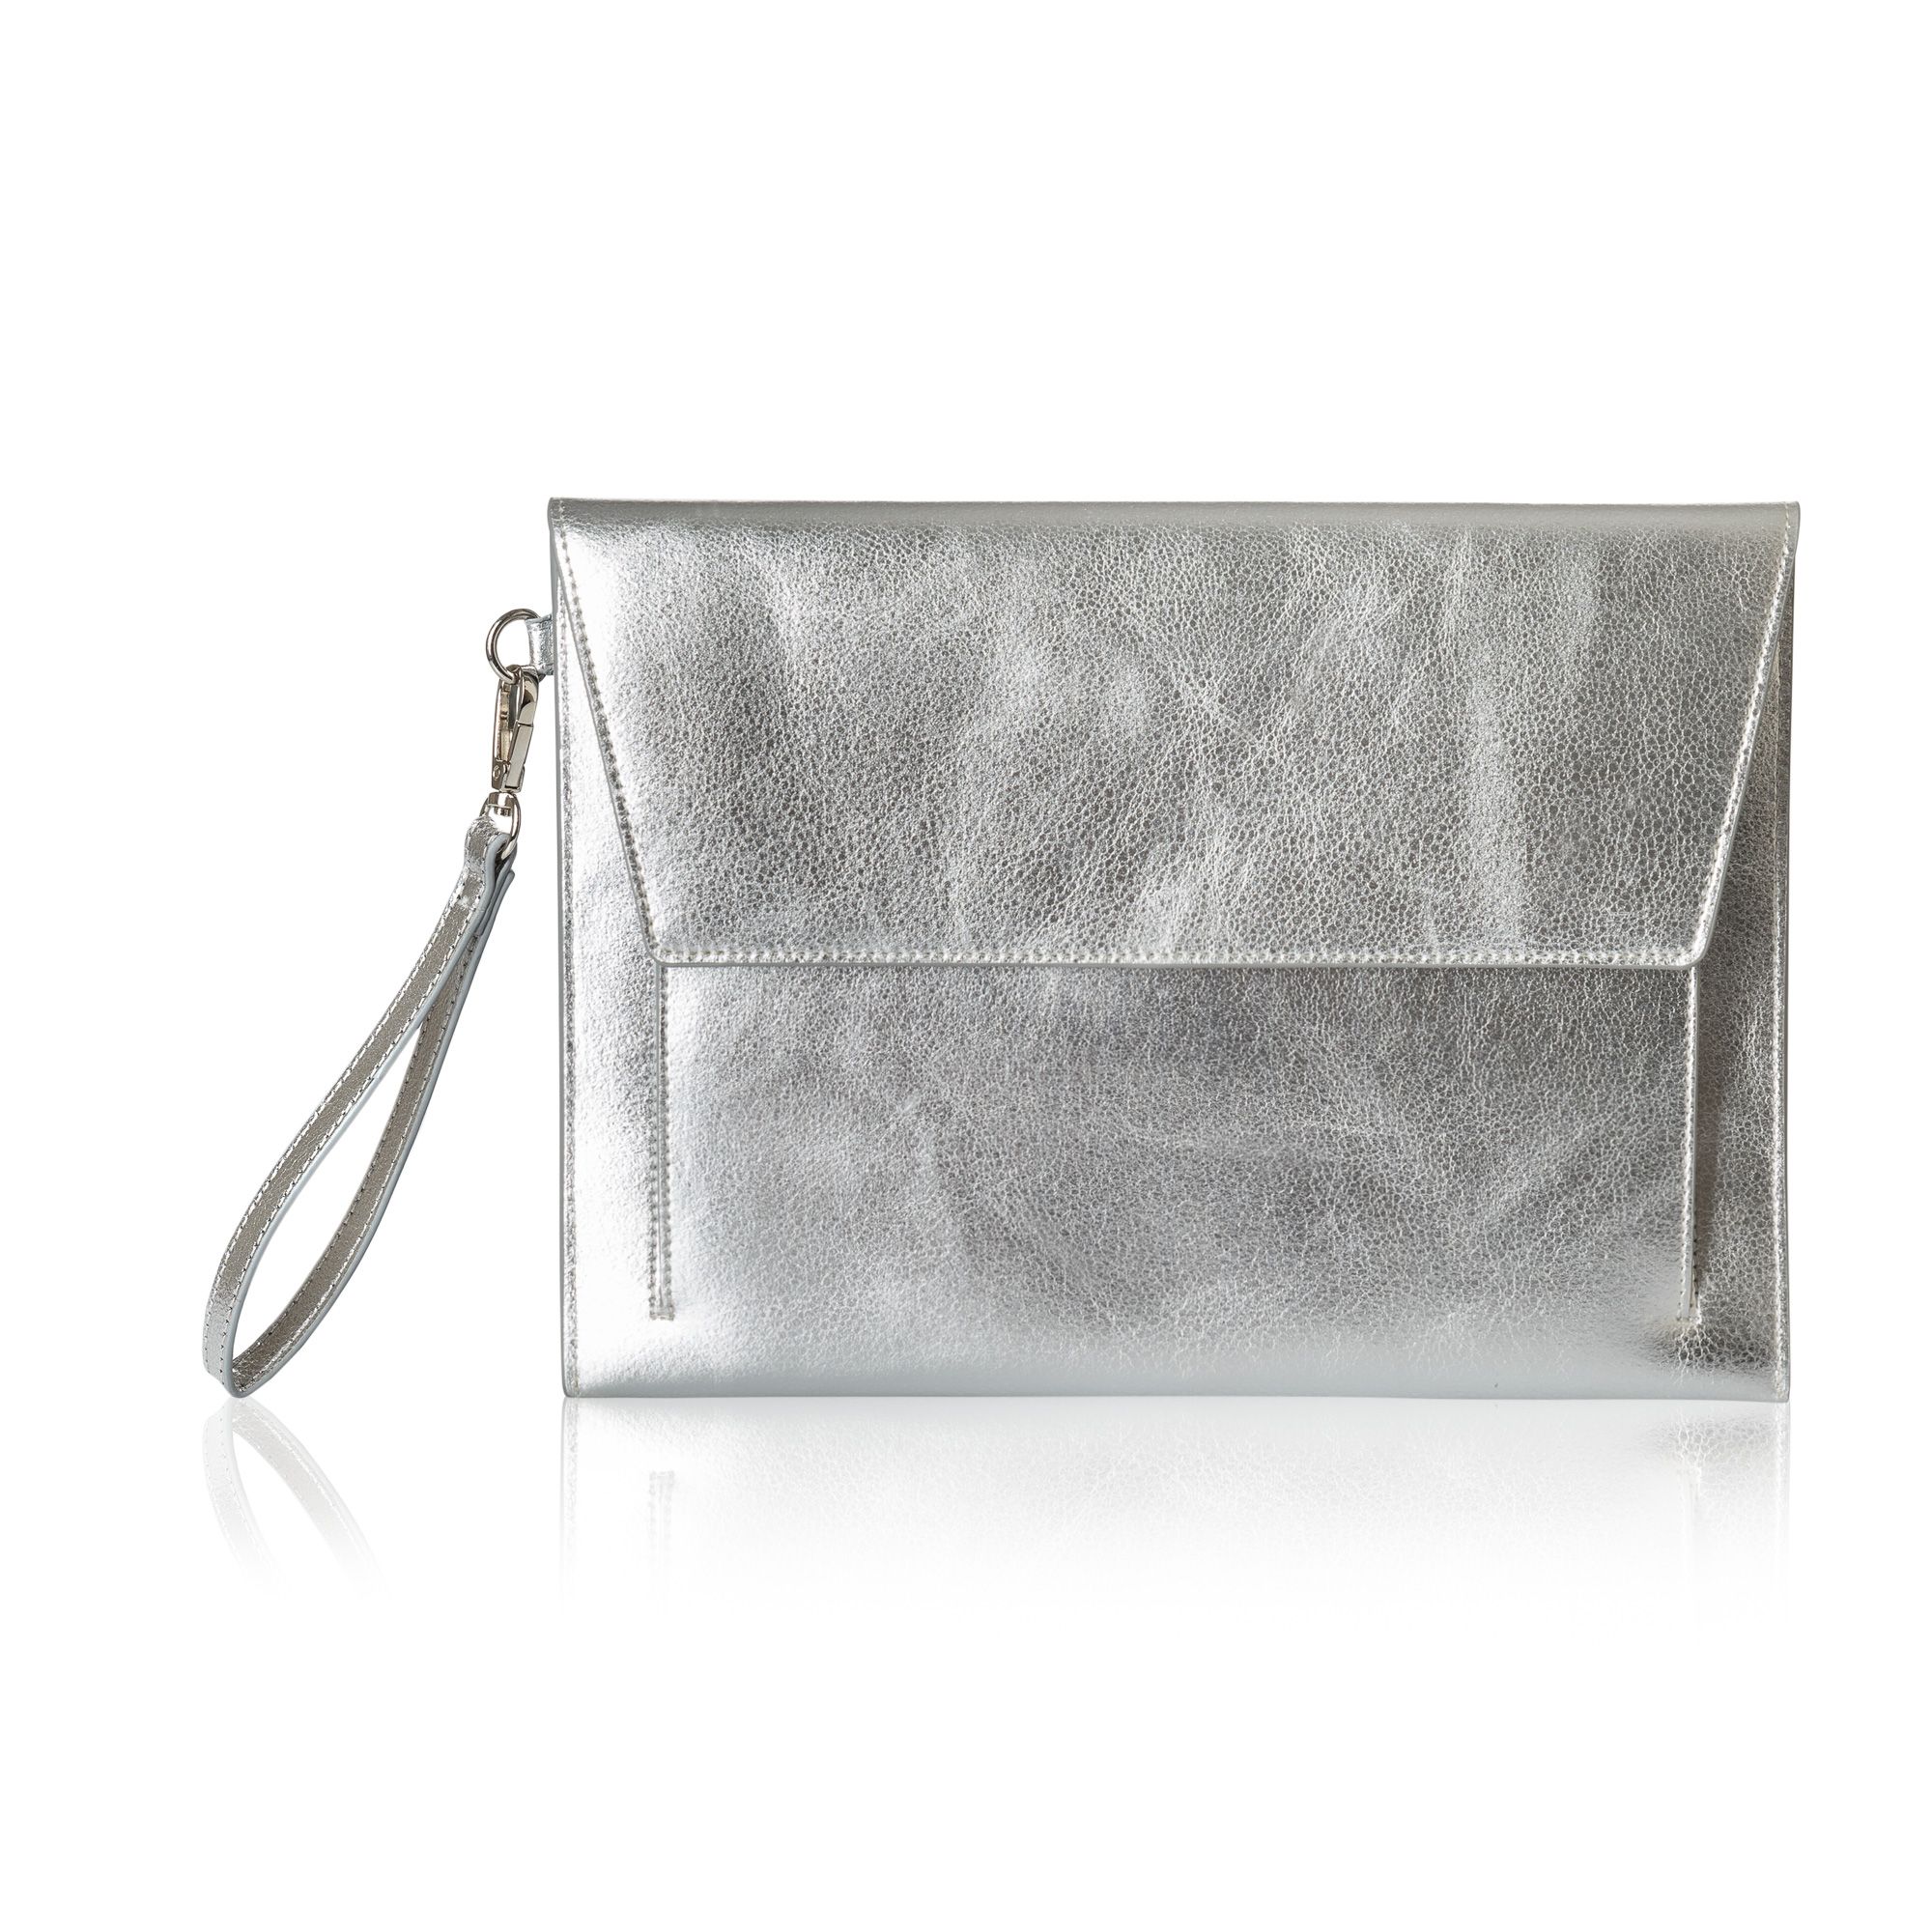 silver envelope clutch bag